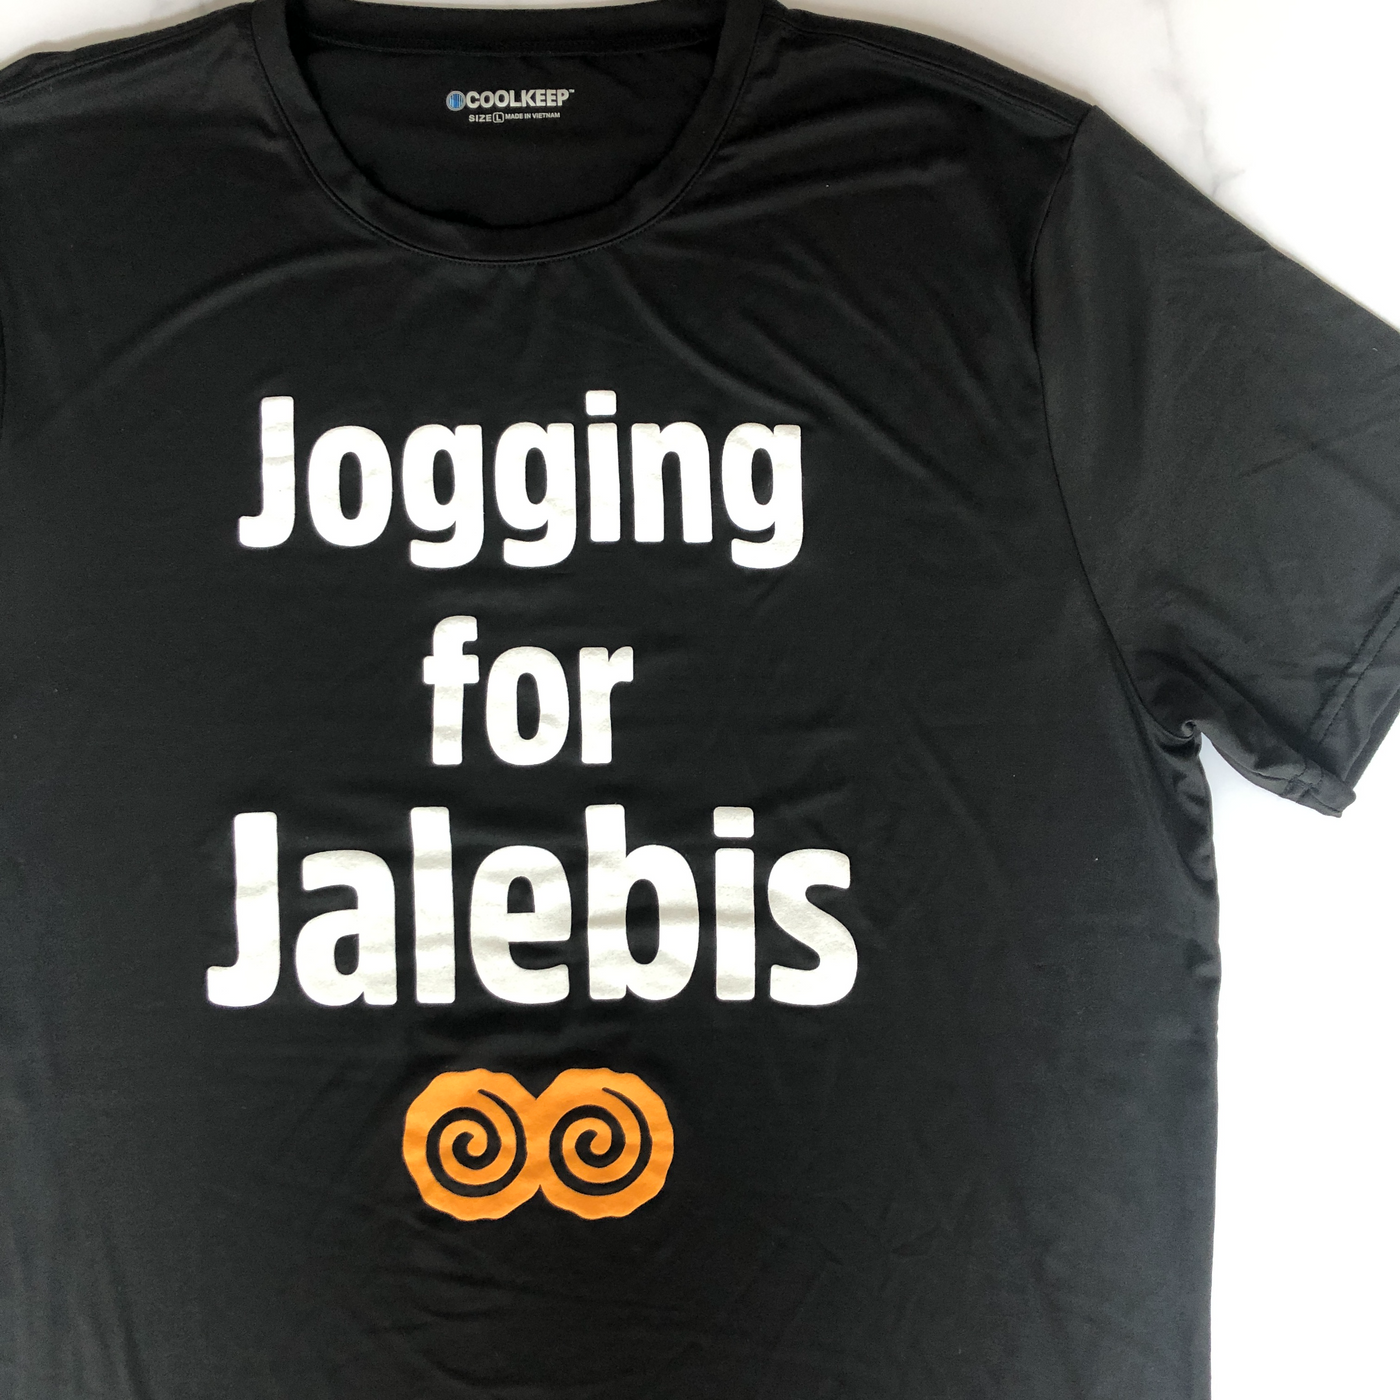 Jogging for Jalebis Men's Crew